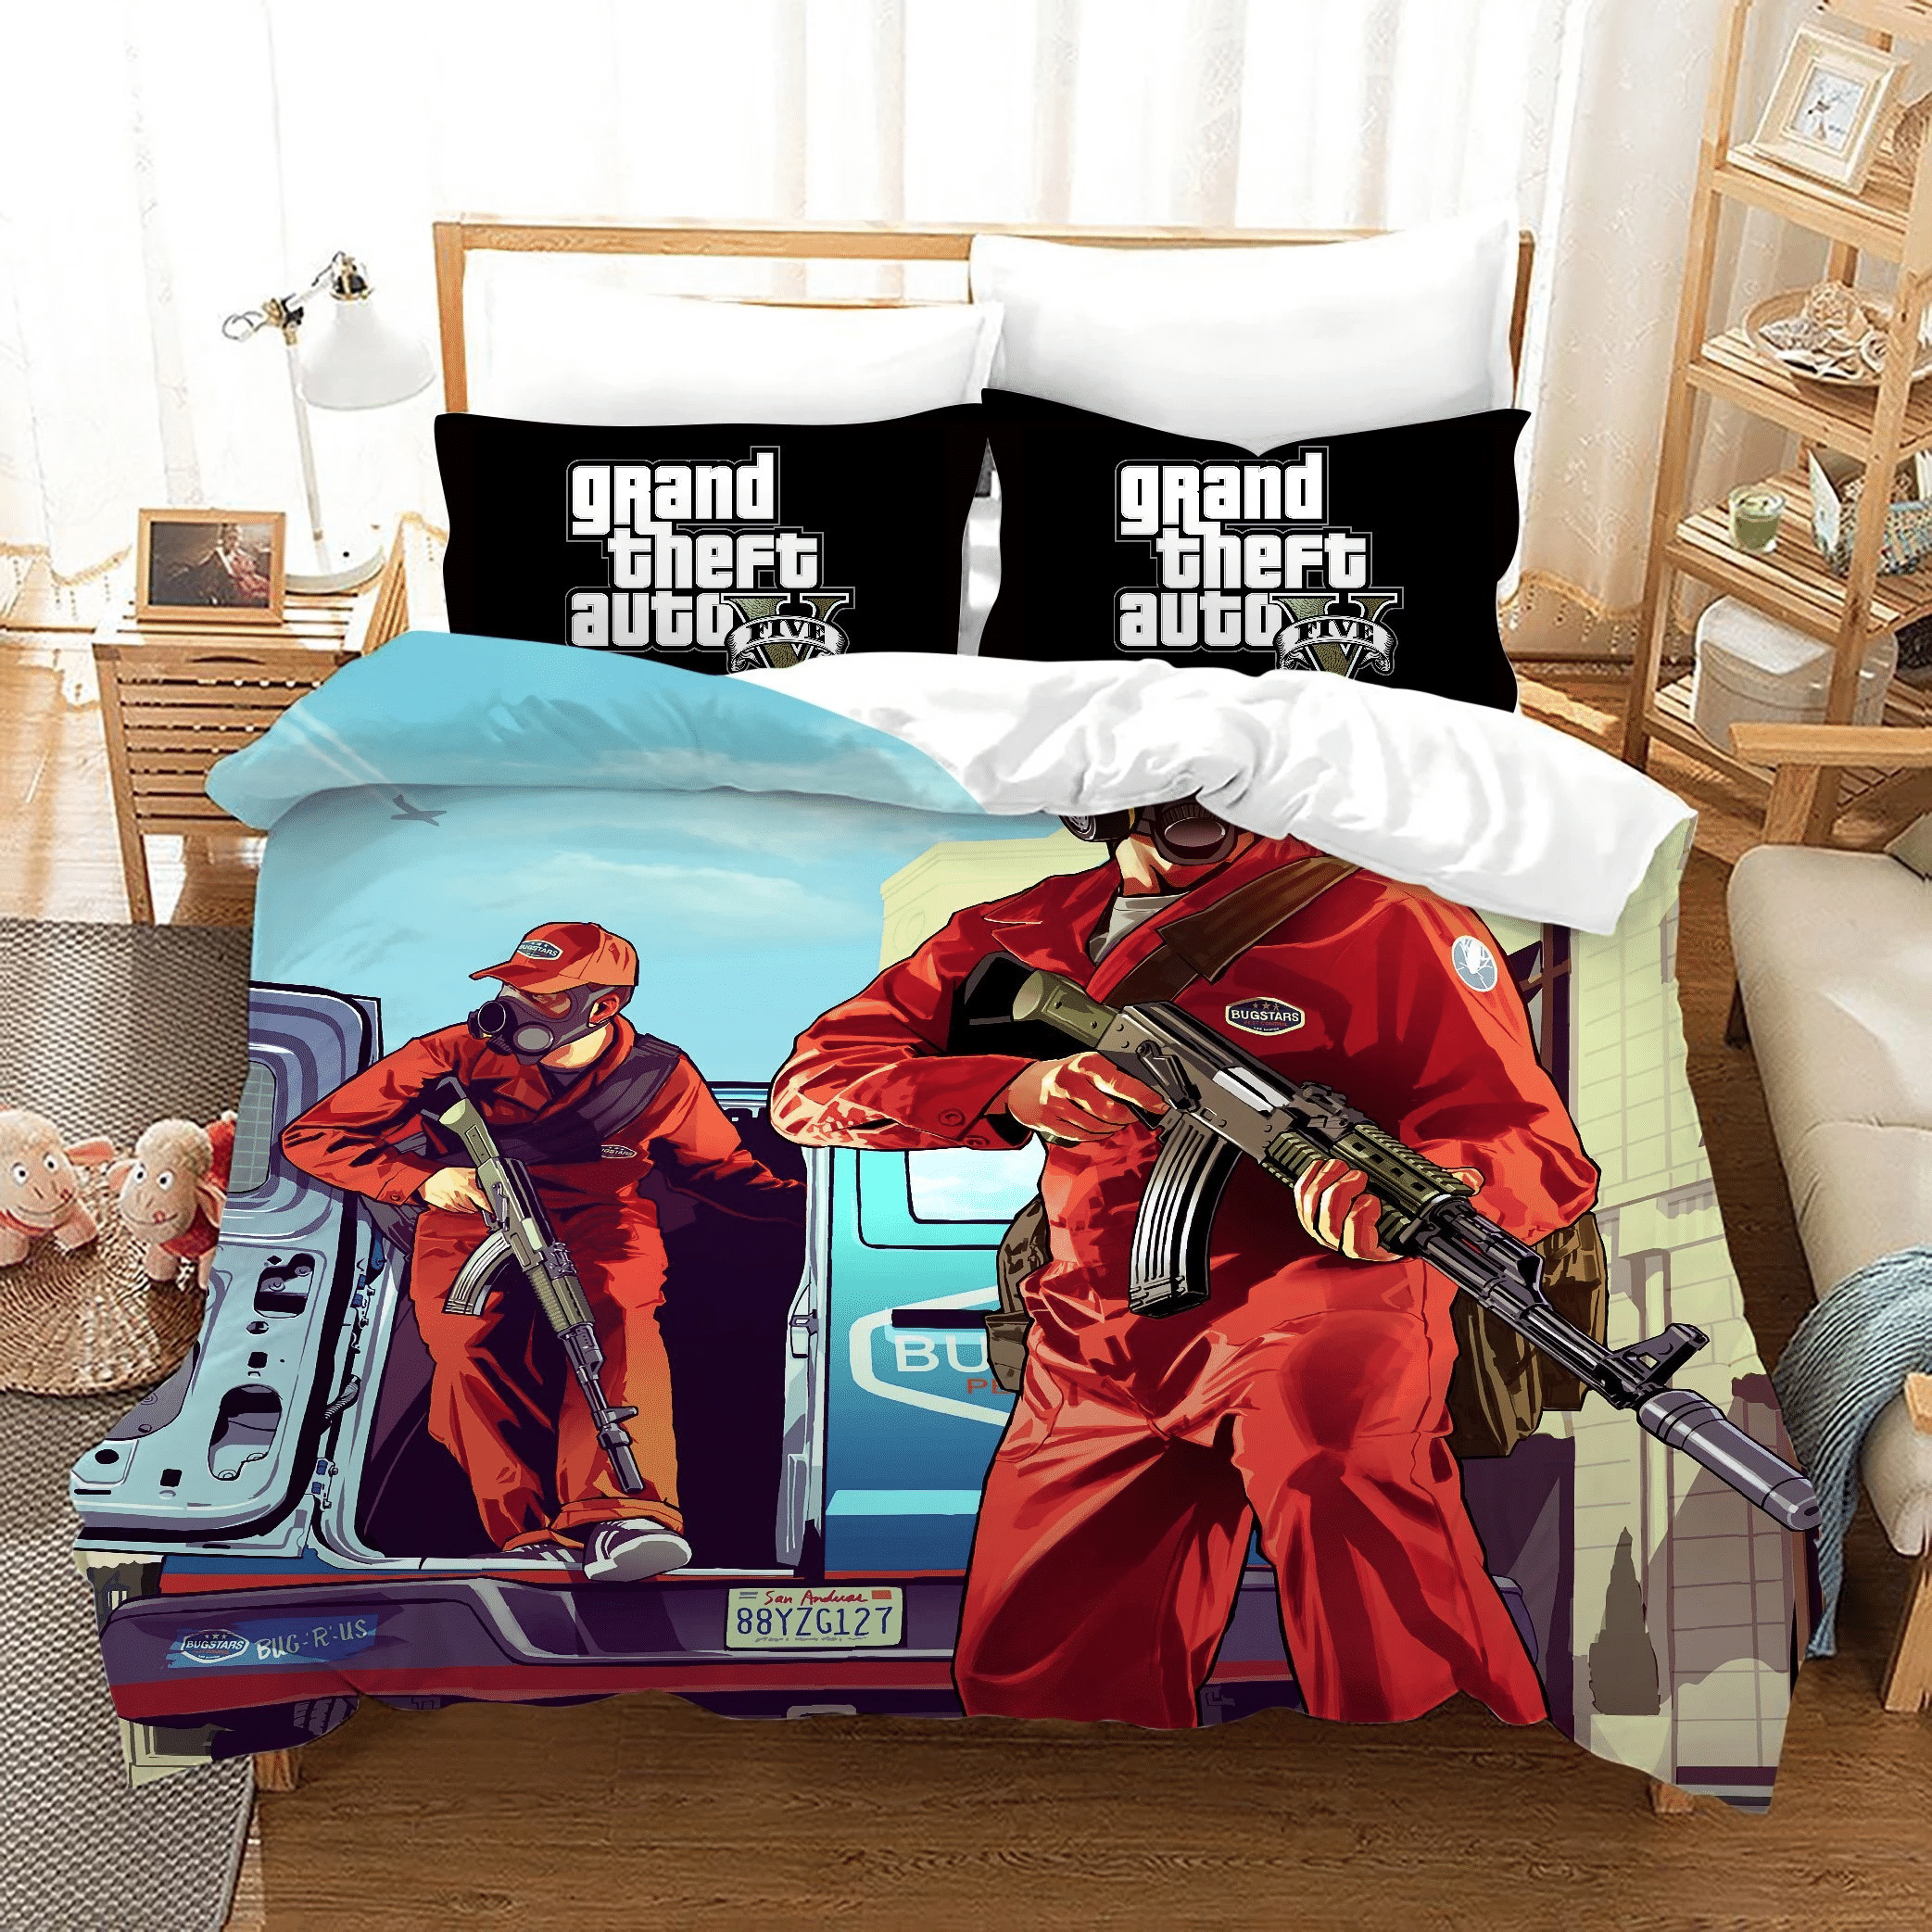 Grand Theft Auto 5 Duvet Cover Pillowcase Bedding Sets Home